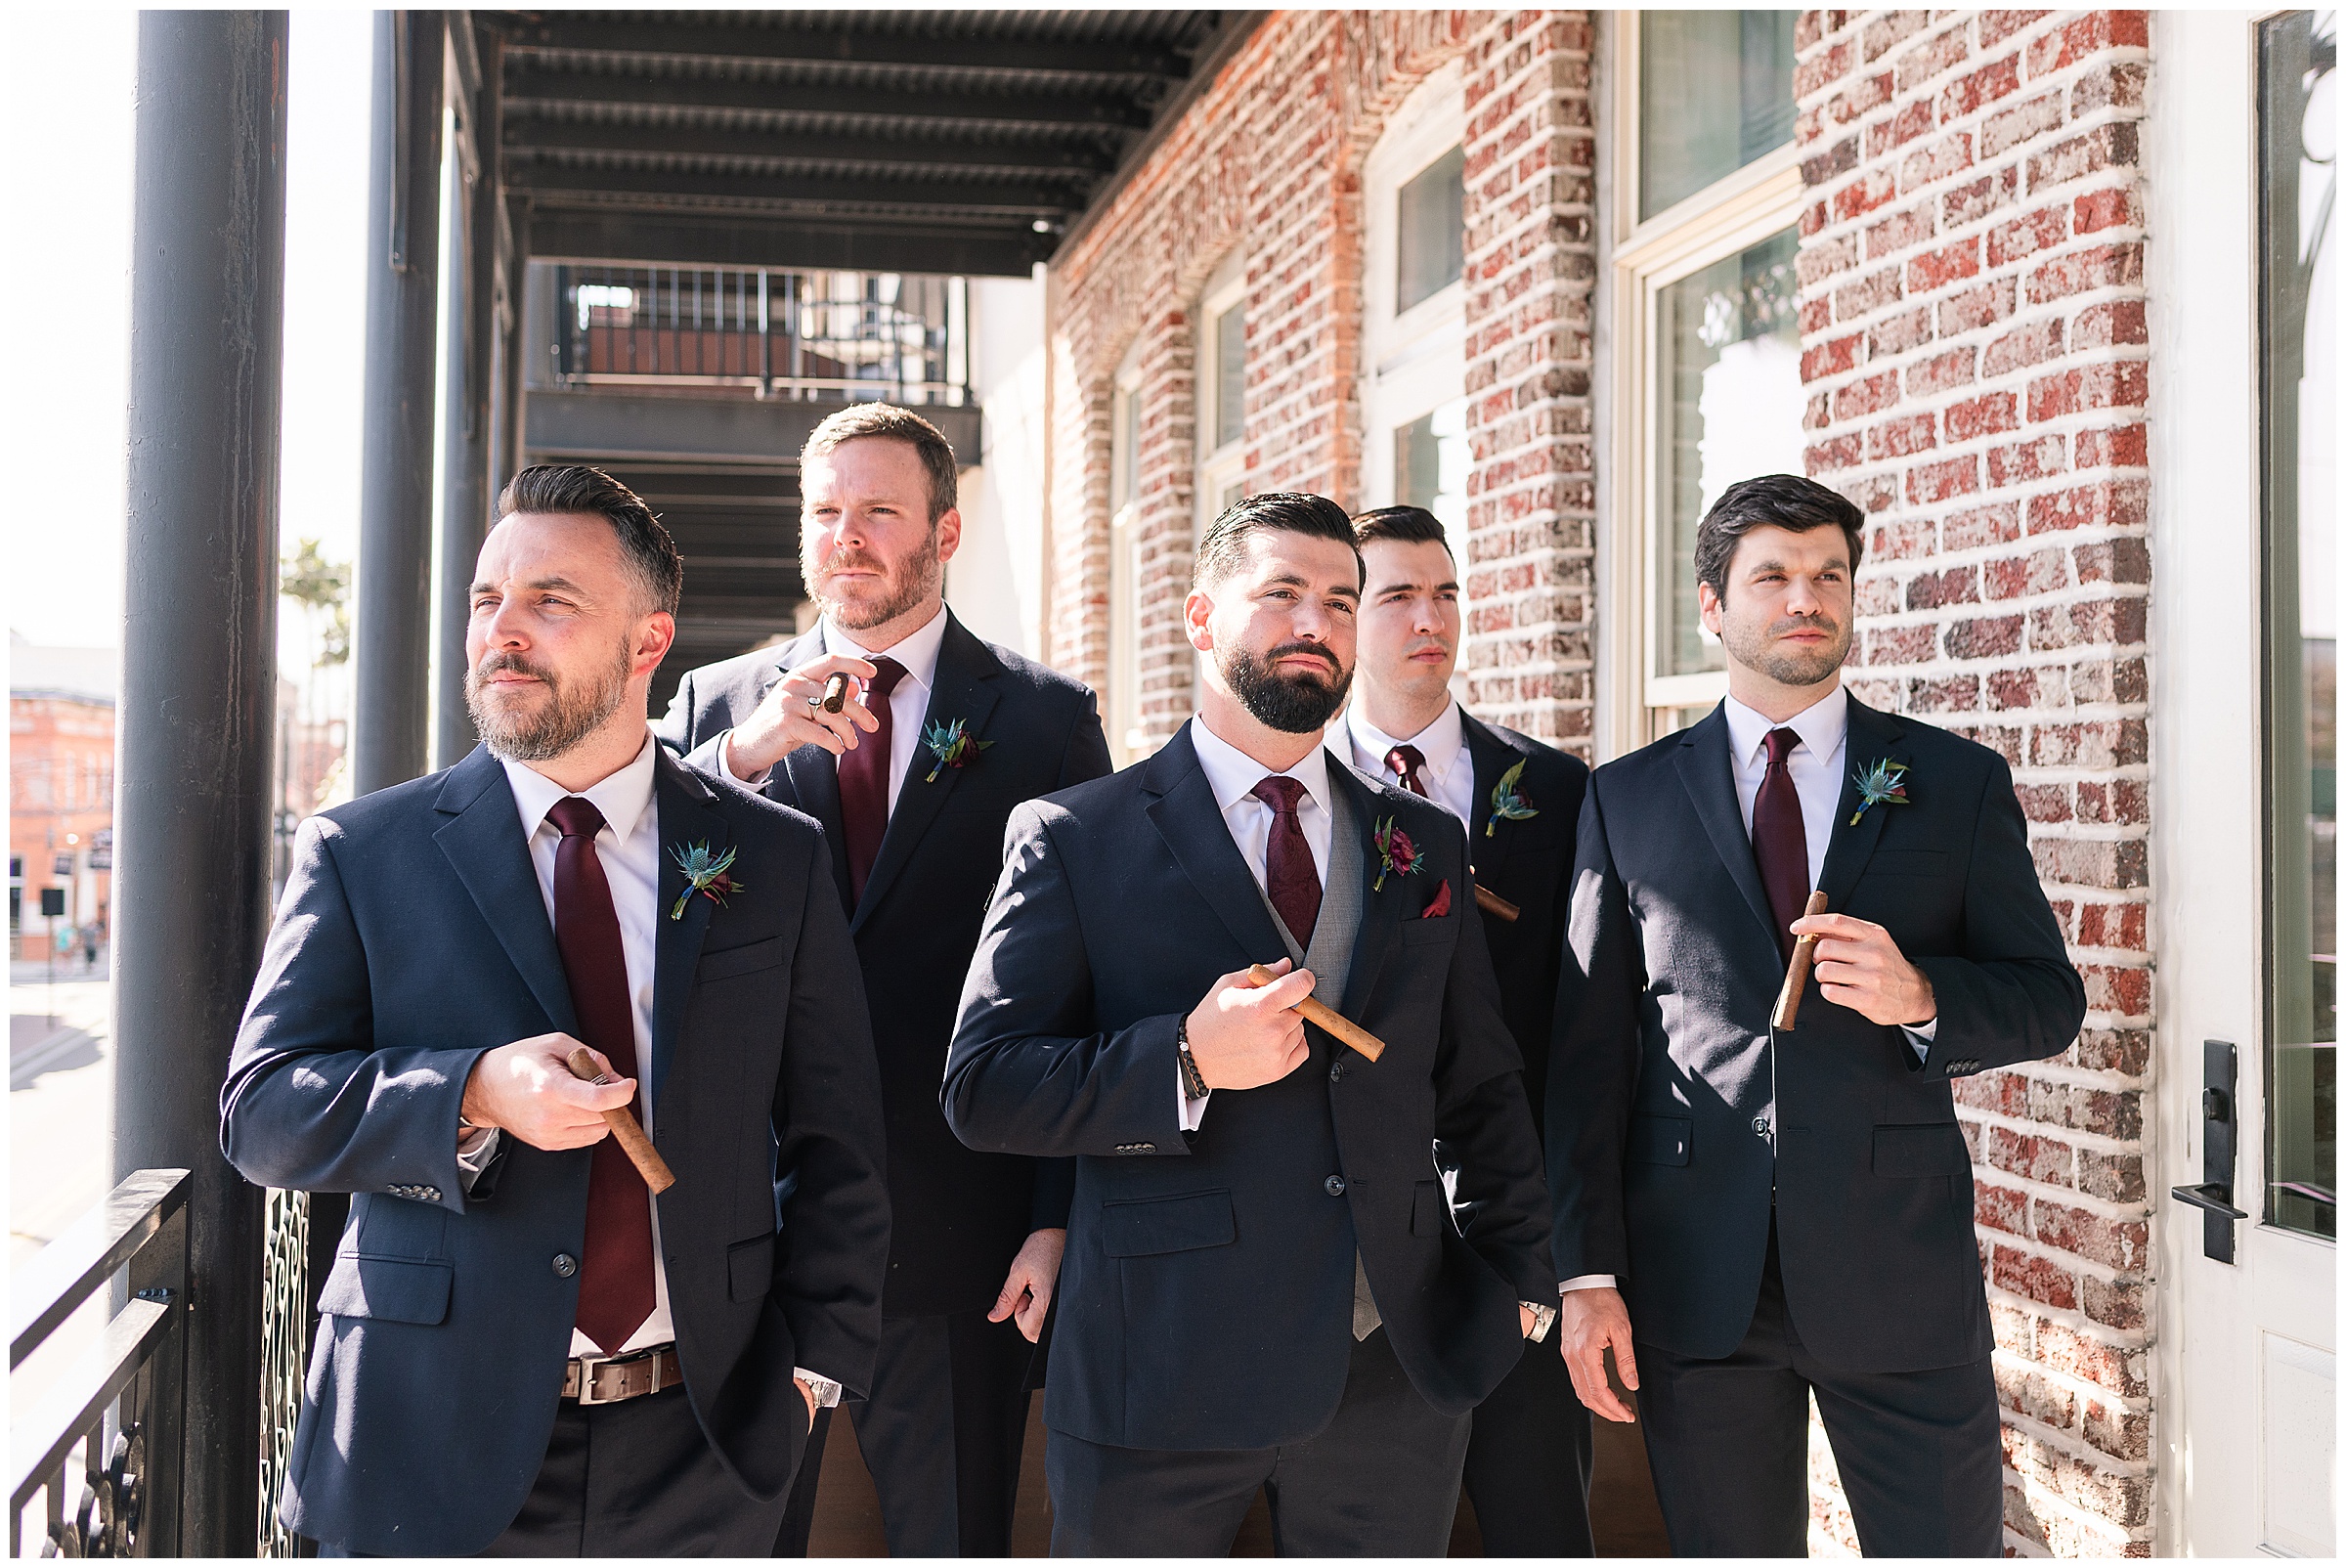 Hotel Haya Wedding Groom and groomsmen with cigars